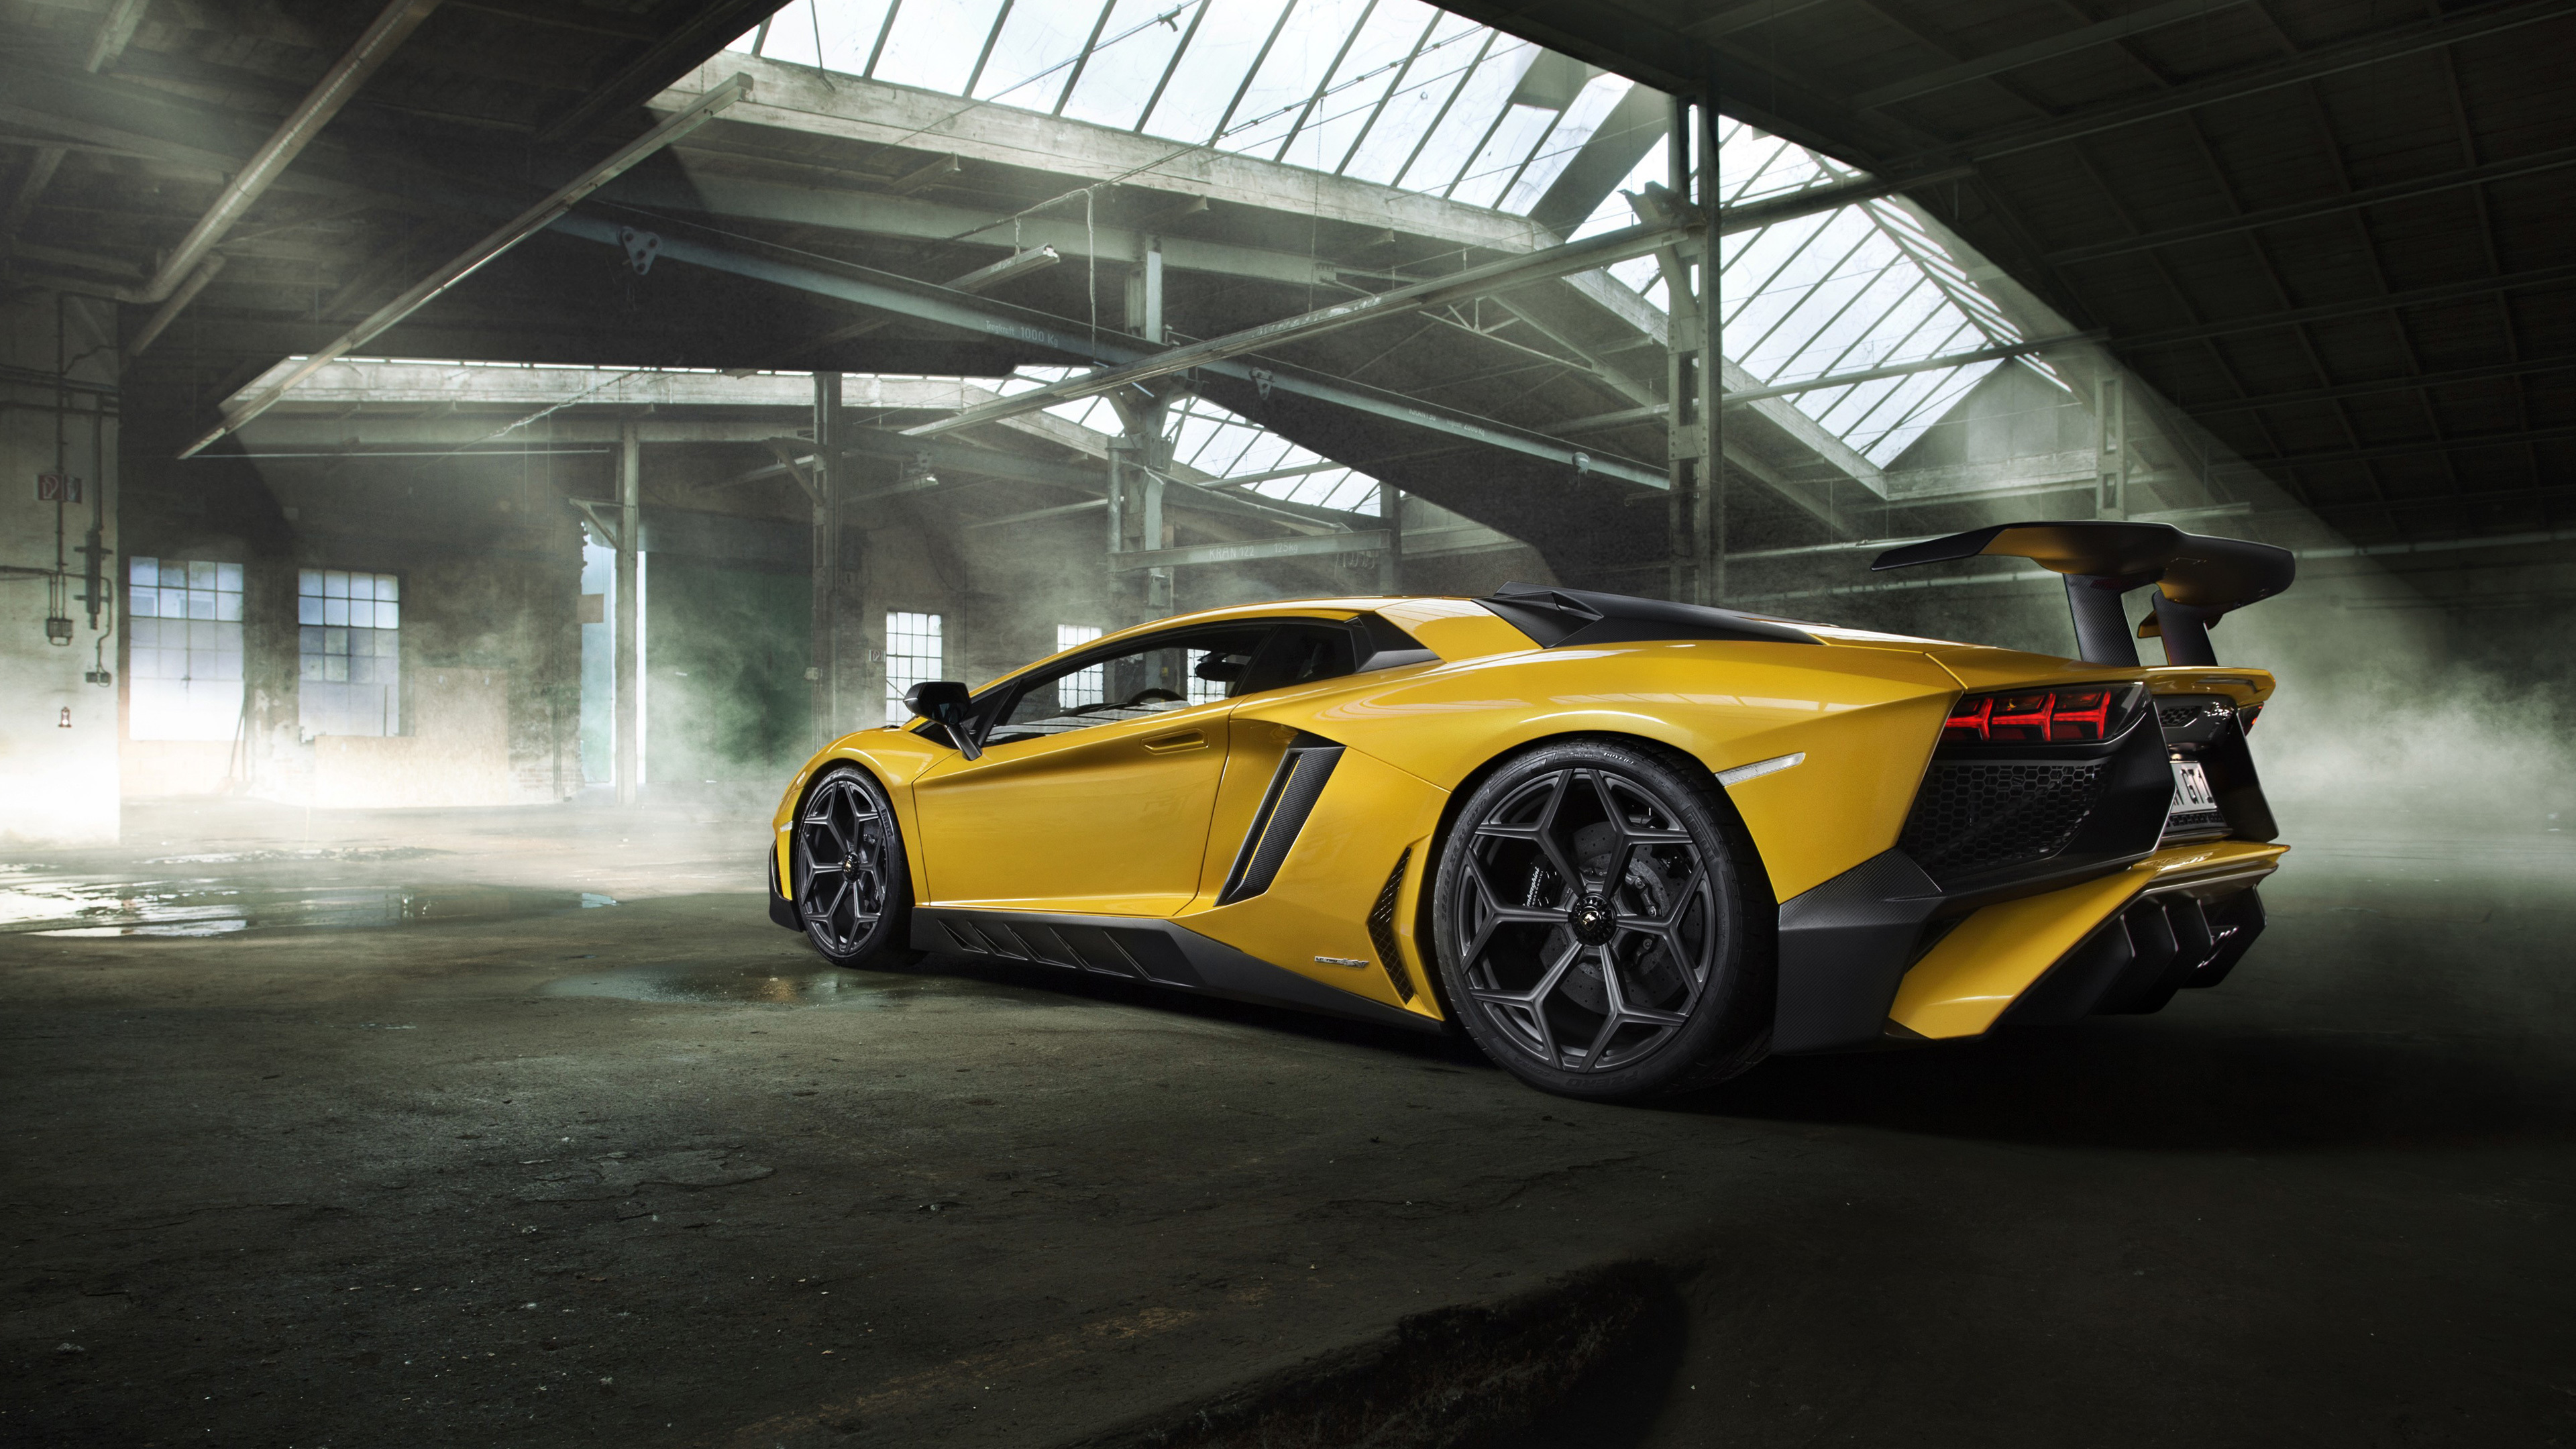 Lamborghini Aventador Wallpapers Images Photos Pictures ...